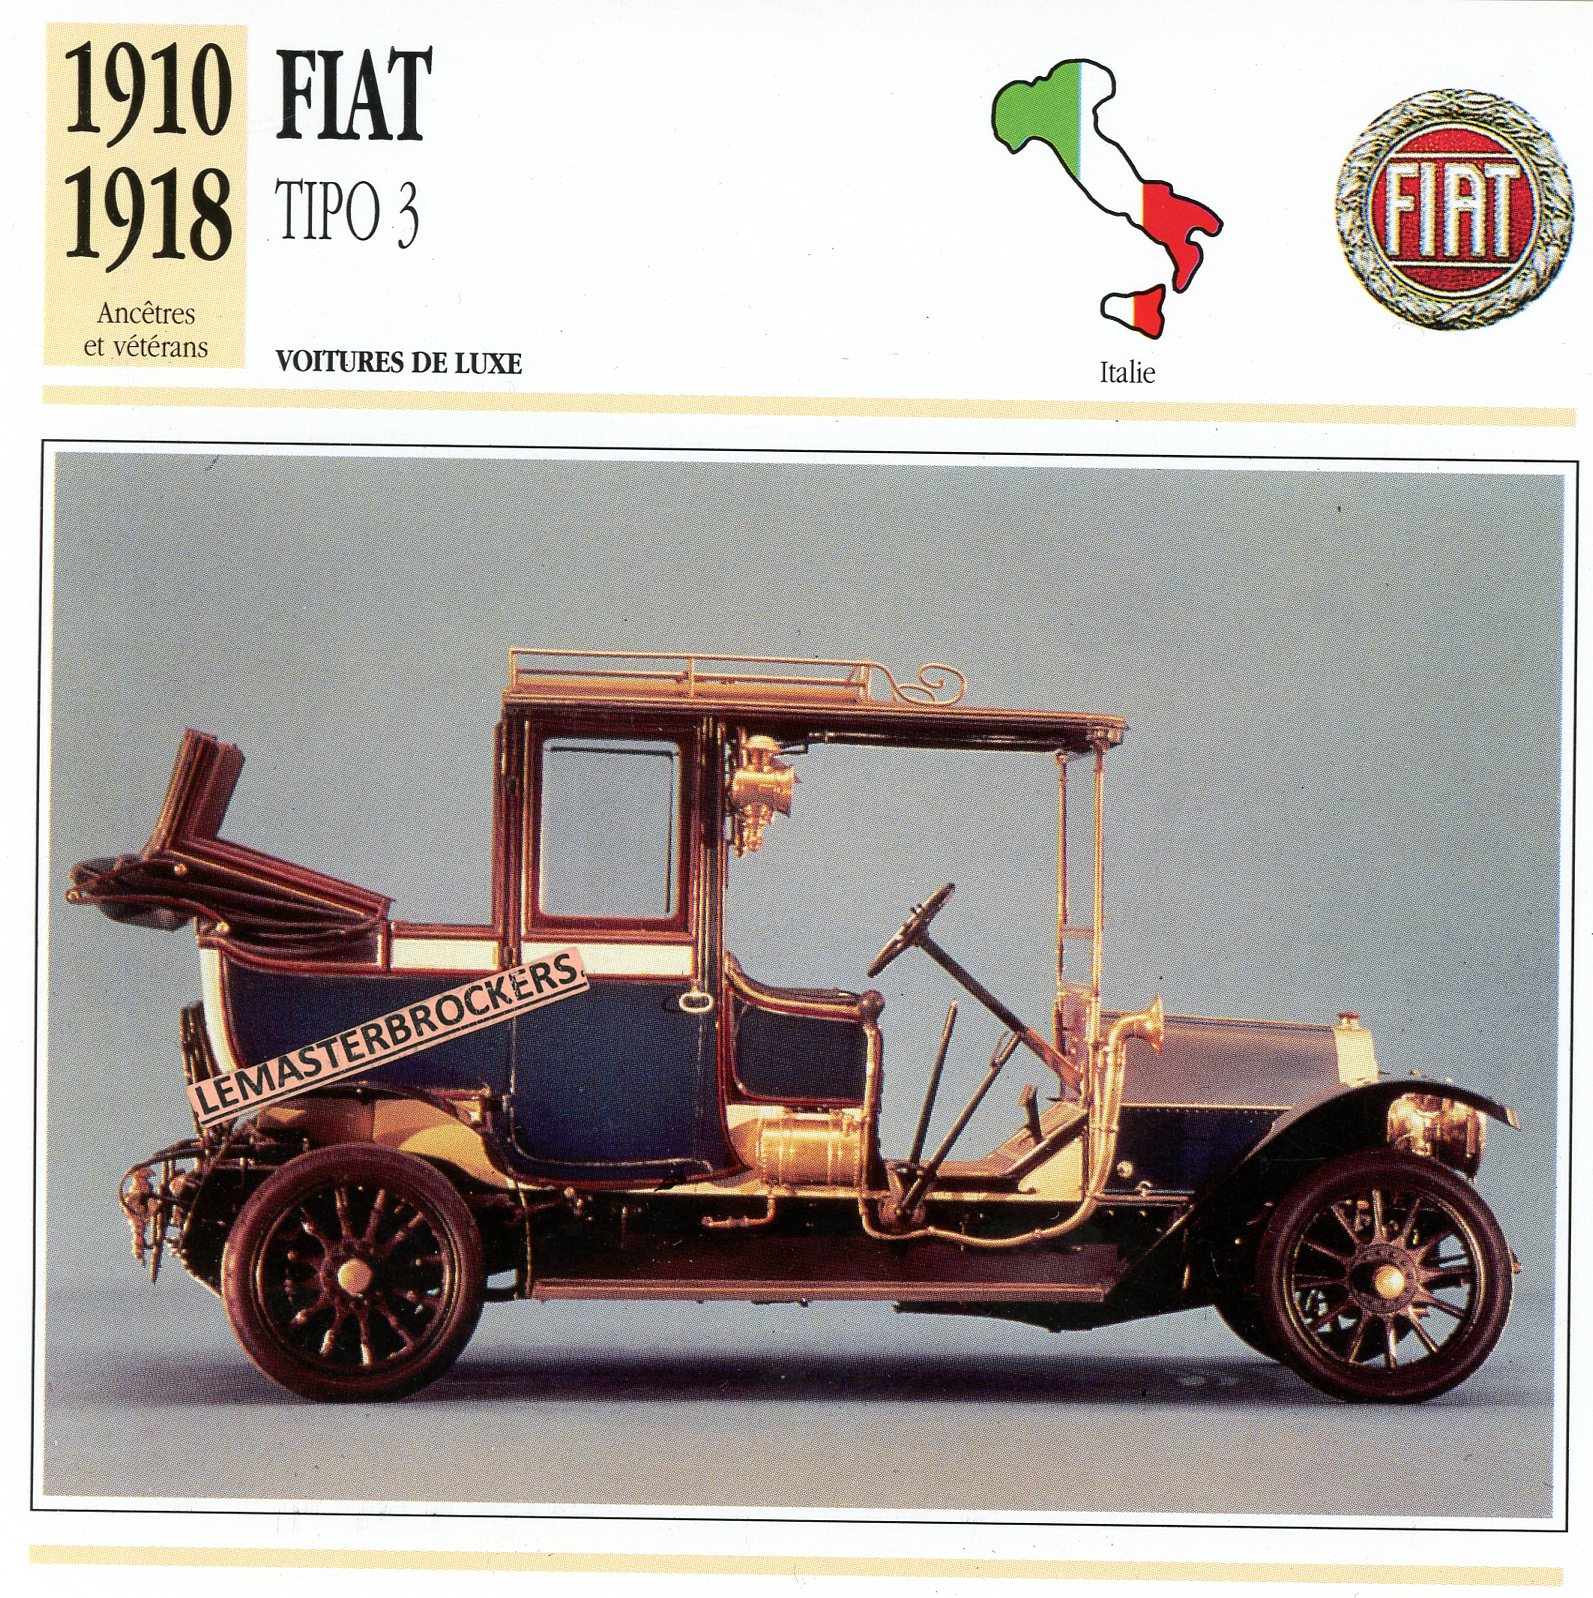 FICHE-FIAT-TIPO-1910-1911-FICHE-AUTO-ATLAS-LEMASTERBROCKERS-CARS-CARD